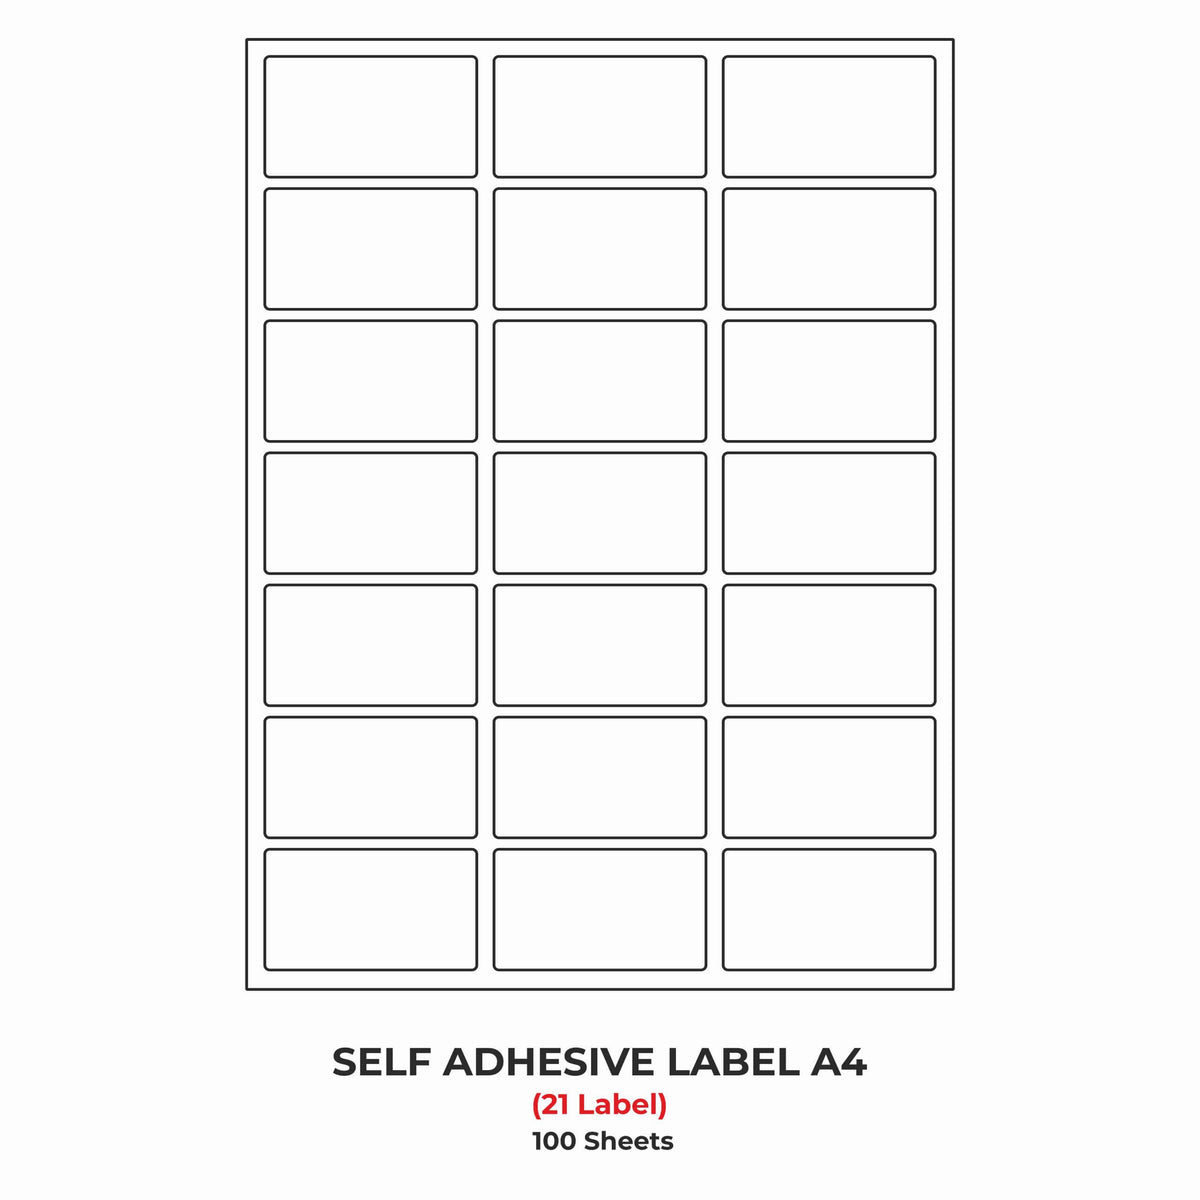 A4 (ST21) Address Label (64mm x 40mm x 21) (Self Adhesive Label for Inkjet/Copier/Laser Printer)